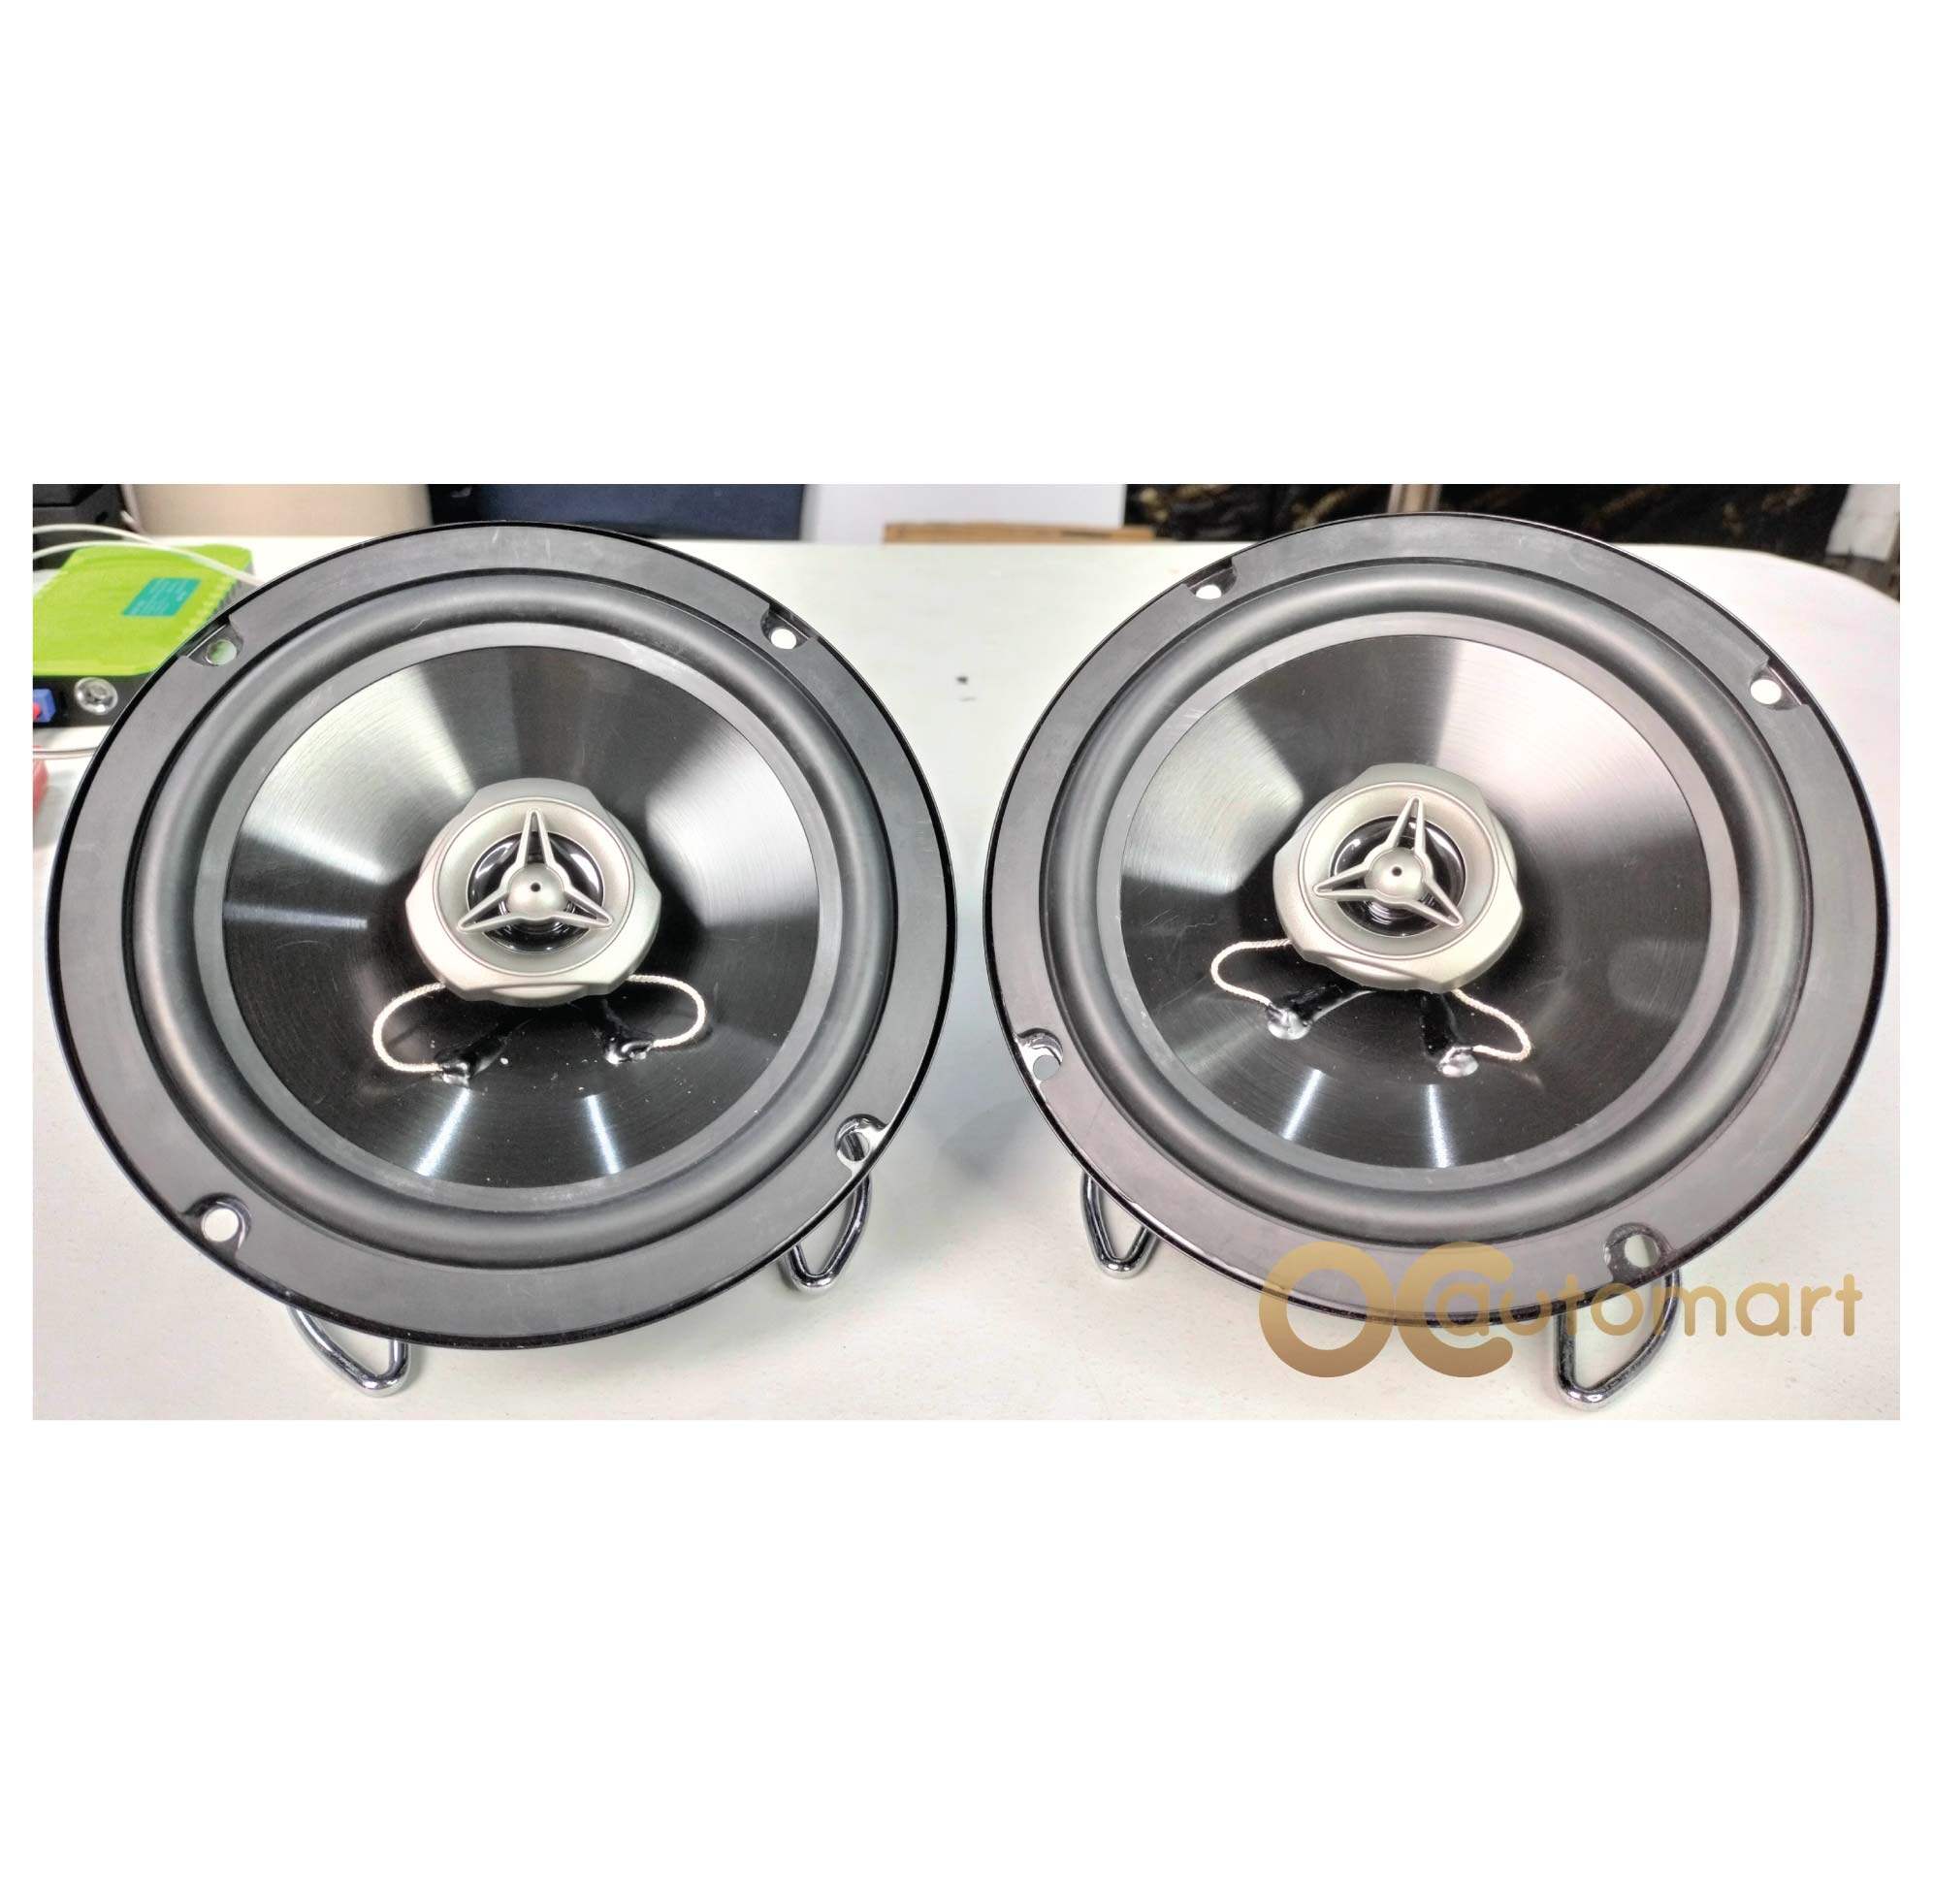 Carrozzeria 6.5 inch 2-Way Car Speaker 100% Original Perodua,Proton,Honda,Toyota,Nissan Car Speaker (Ts-6080s)